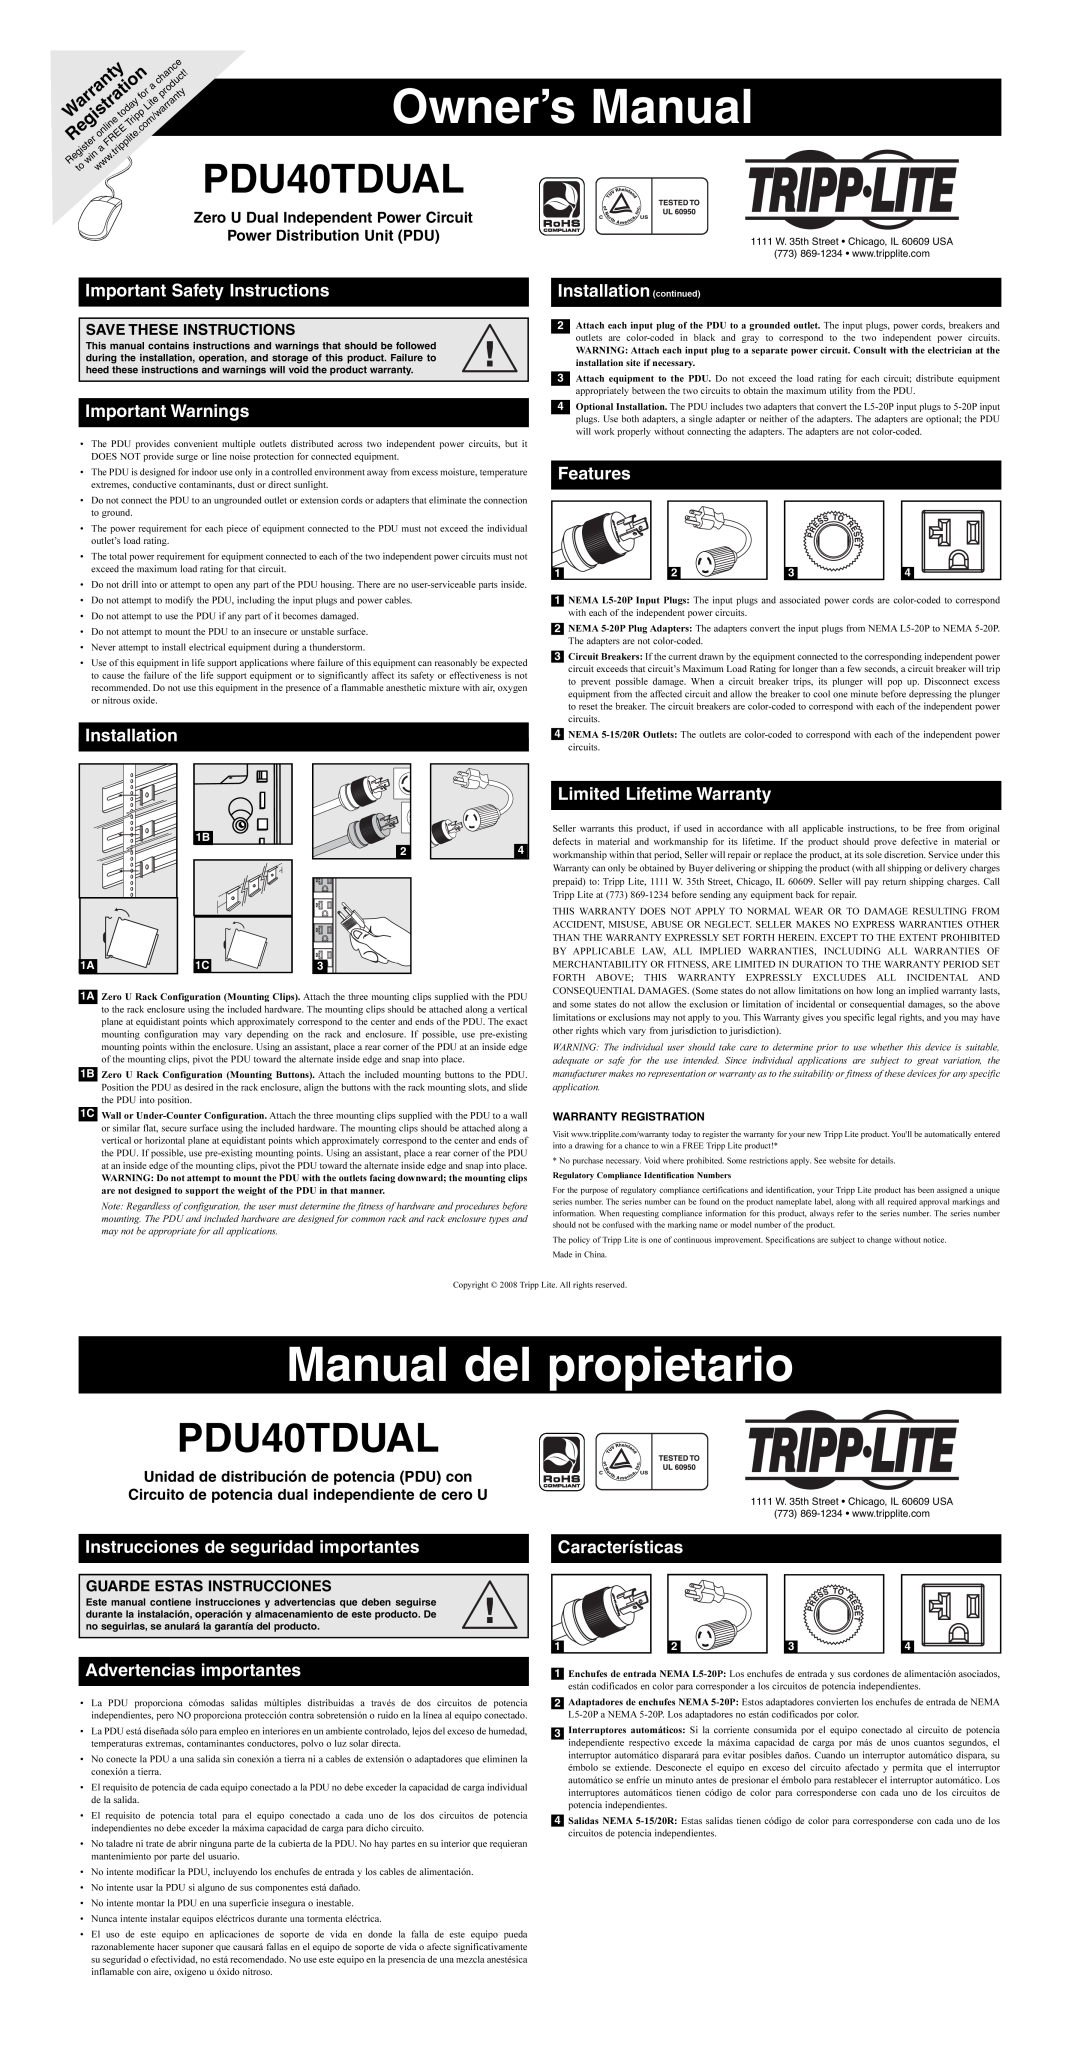 Tripp Lite PDU40TDUAL owner manual Owner’s Manual, Manual del propietario, Important Safety Instructions, Installation 